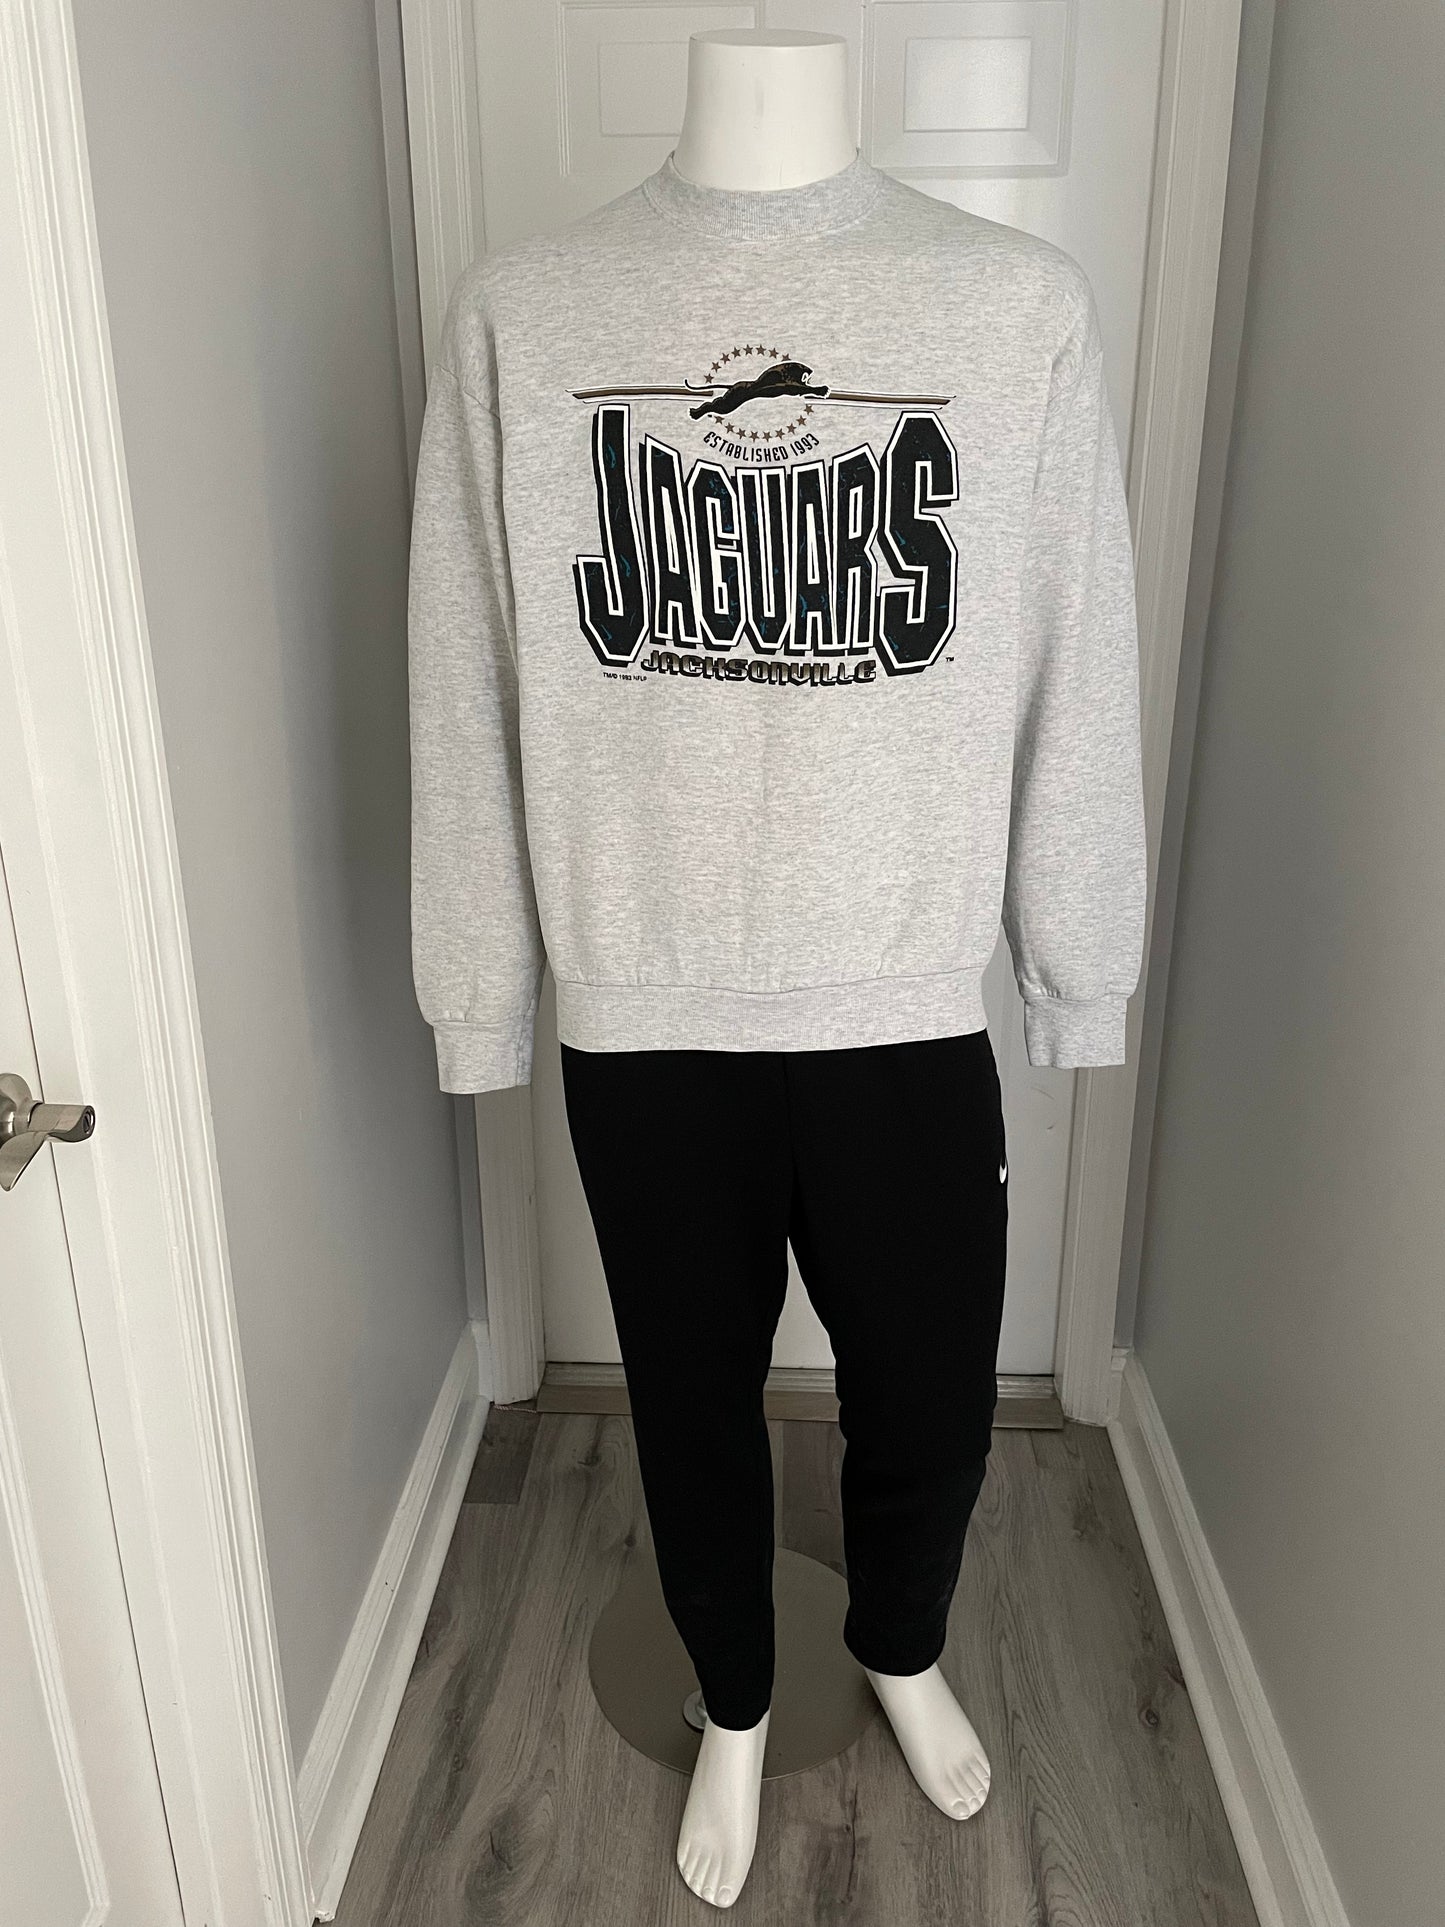 Vintage Jacksonville Jaguars 1993 banned logo sweatshirt size LARGE